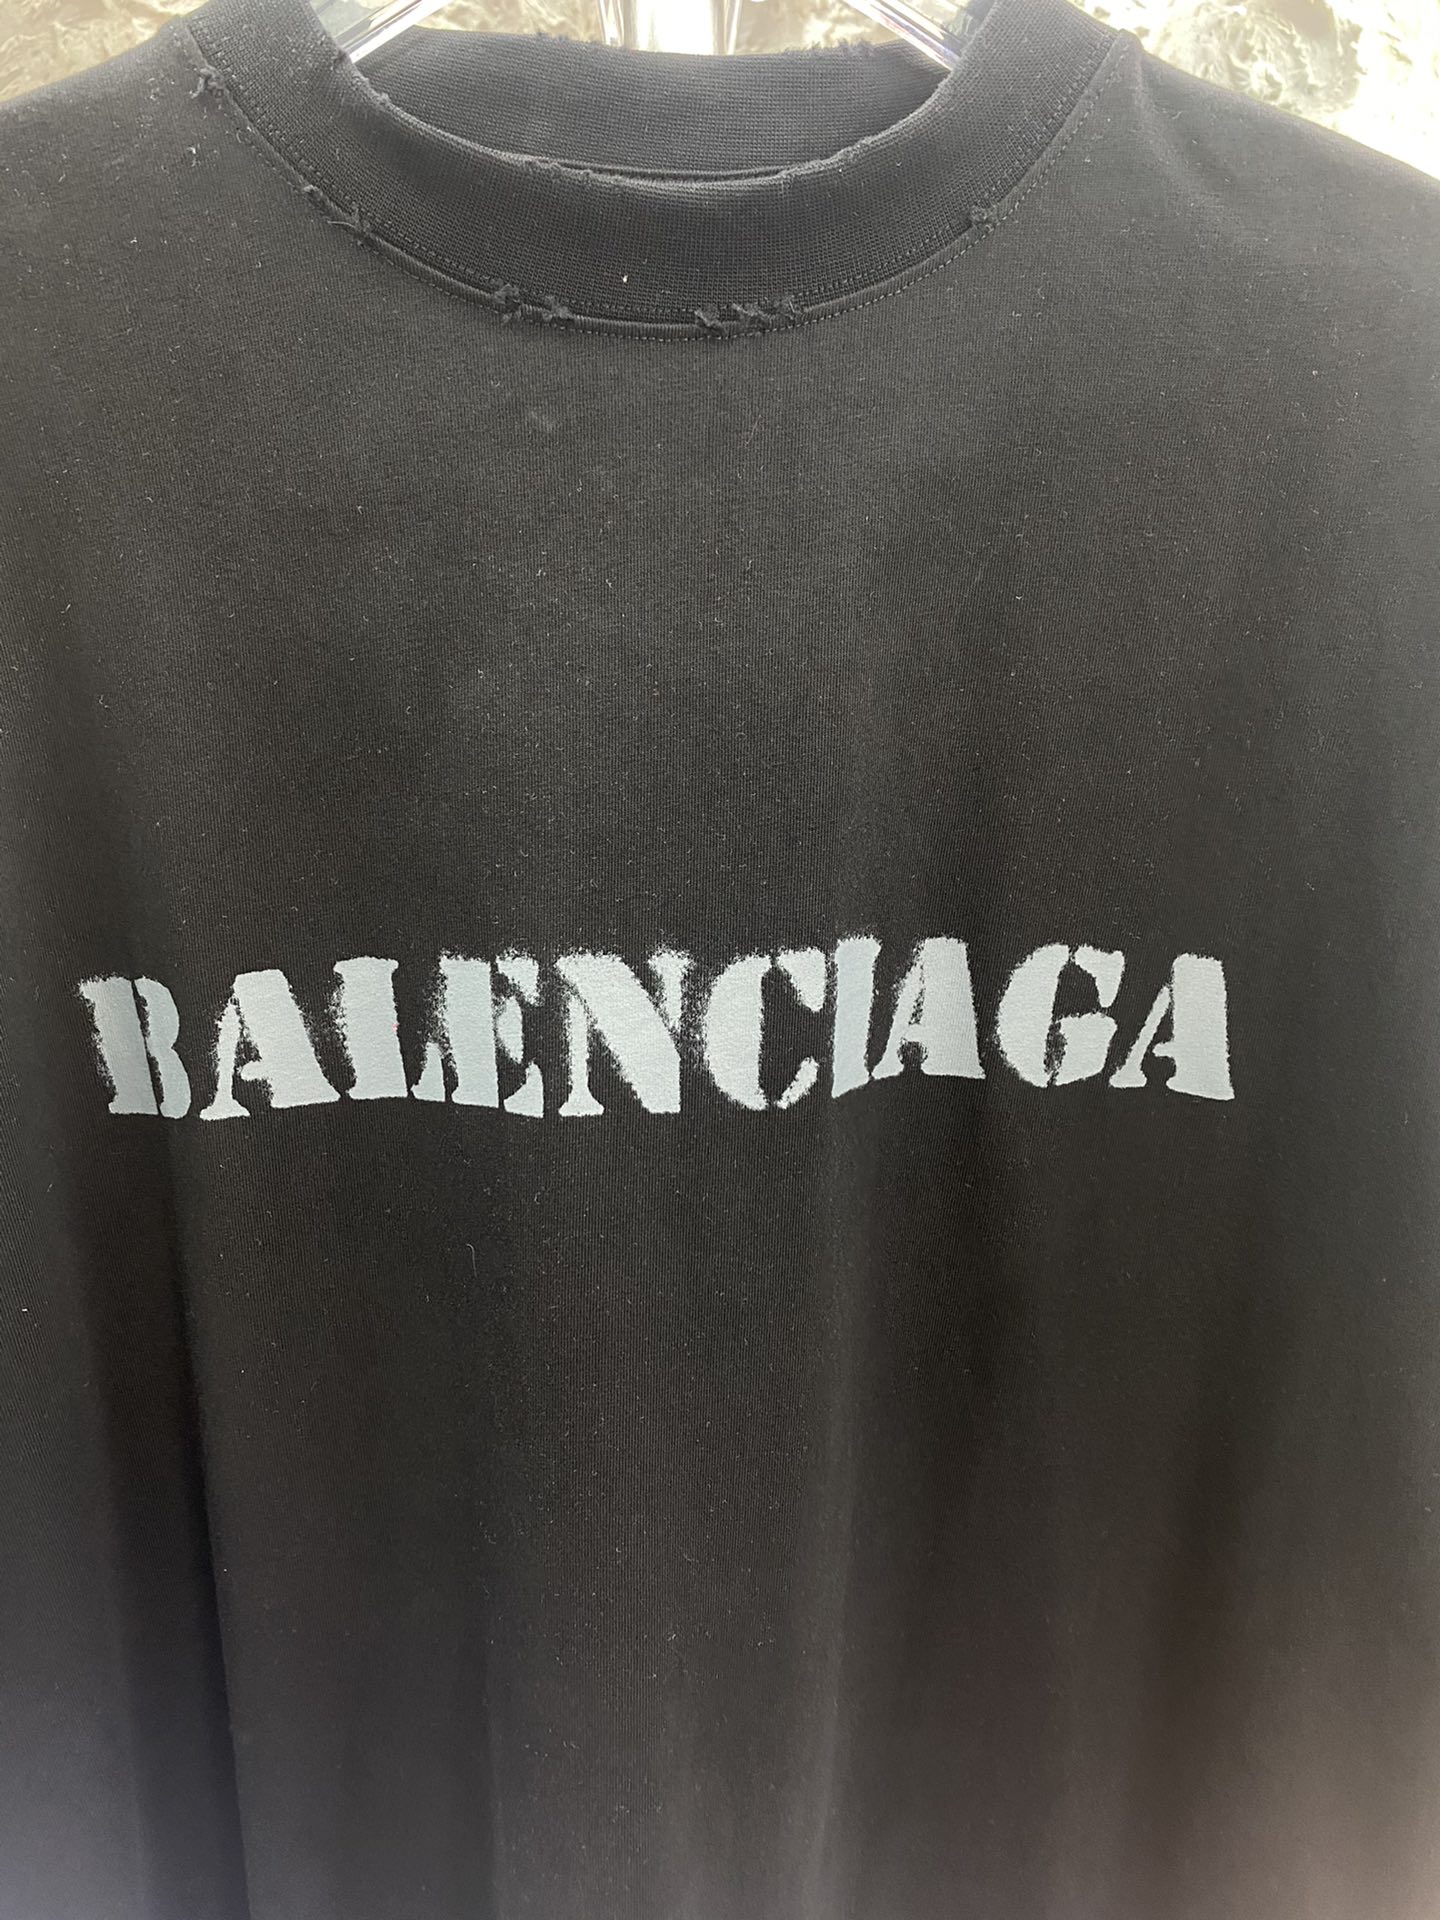 Balenciaga巴黎世家喷砂logo字母短袖Tee袖子以及下摆采用磨烂效果走线平直线距一致内里处理干